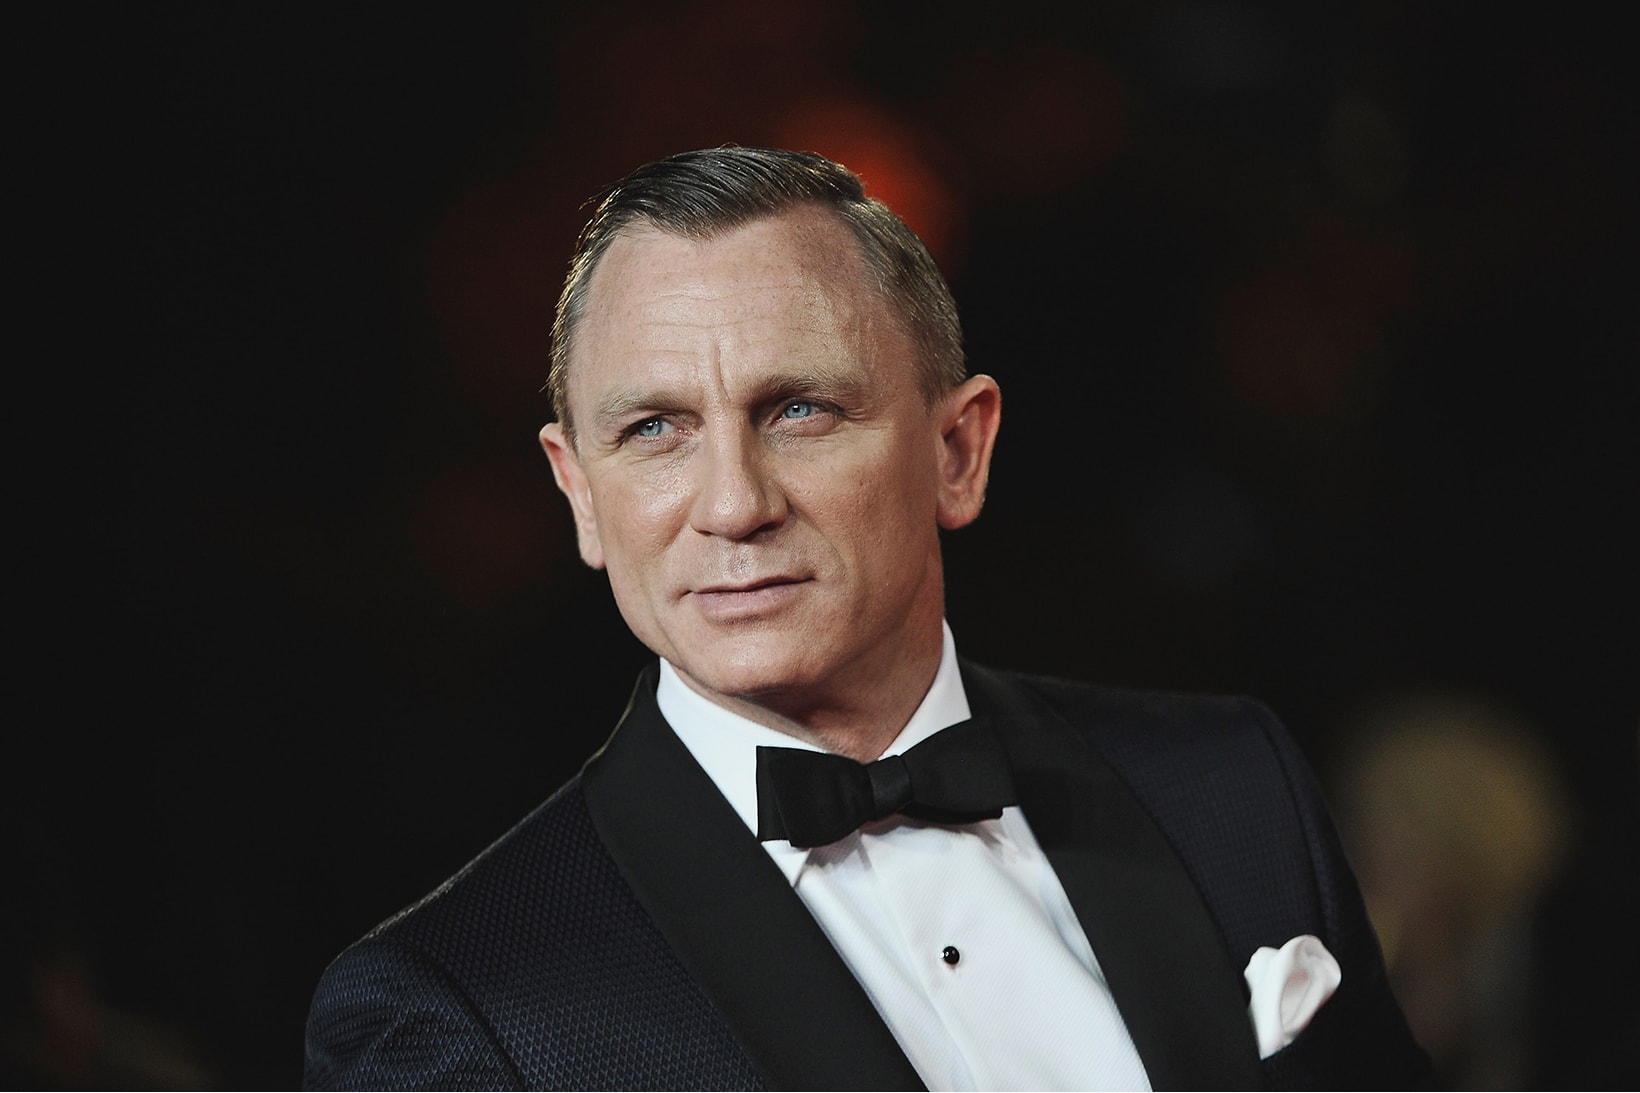 Daniel Craig in suit to return as James Bond